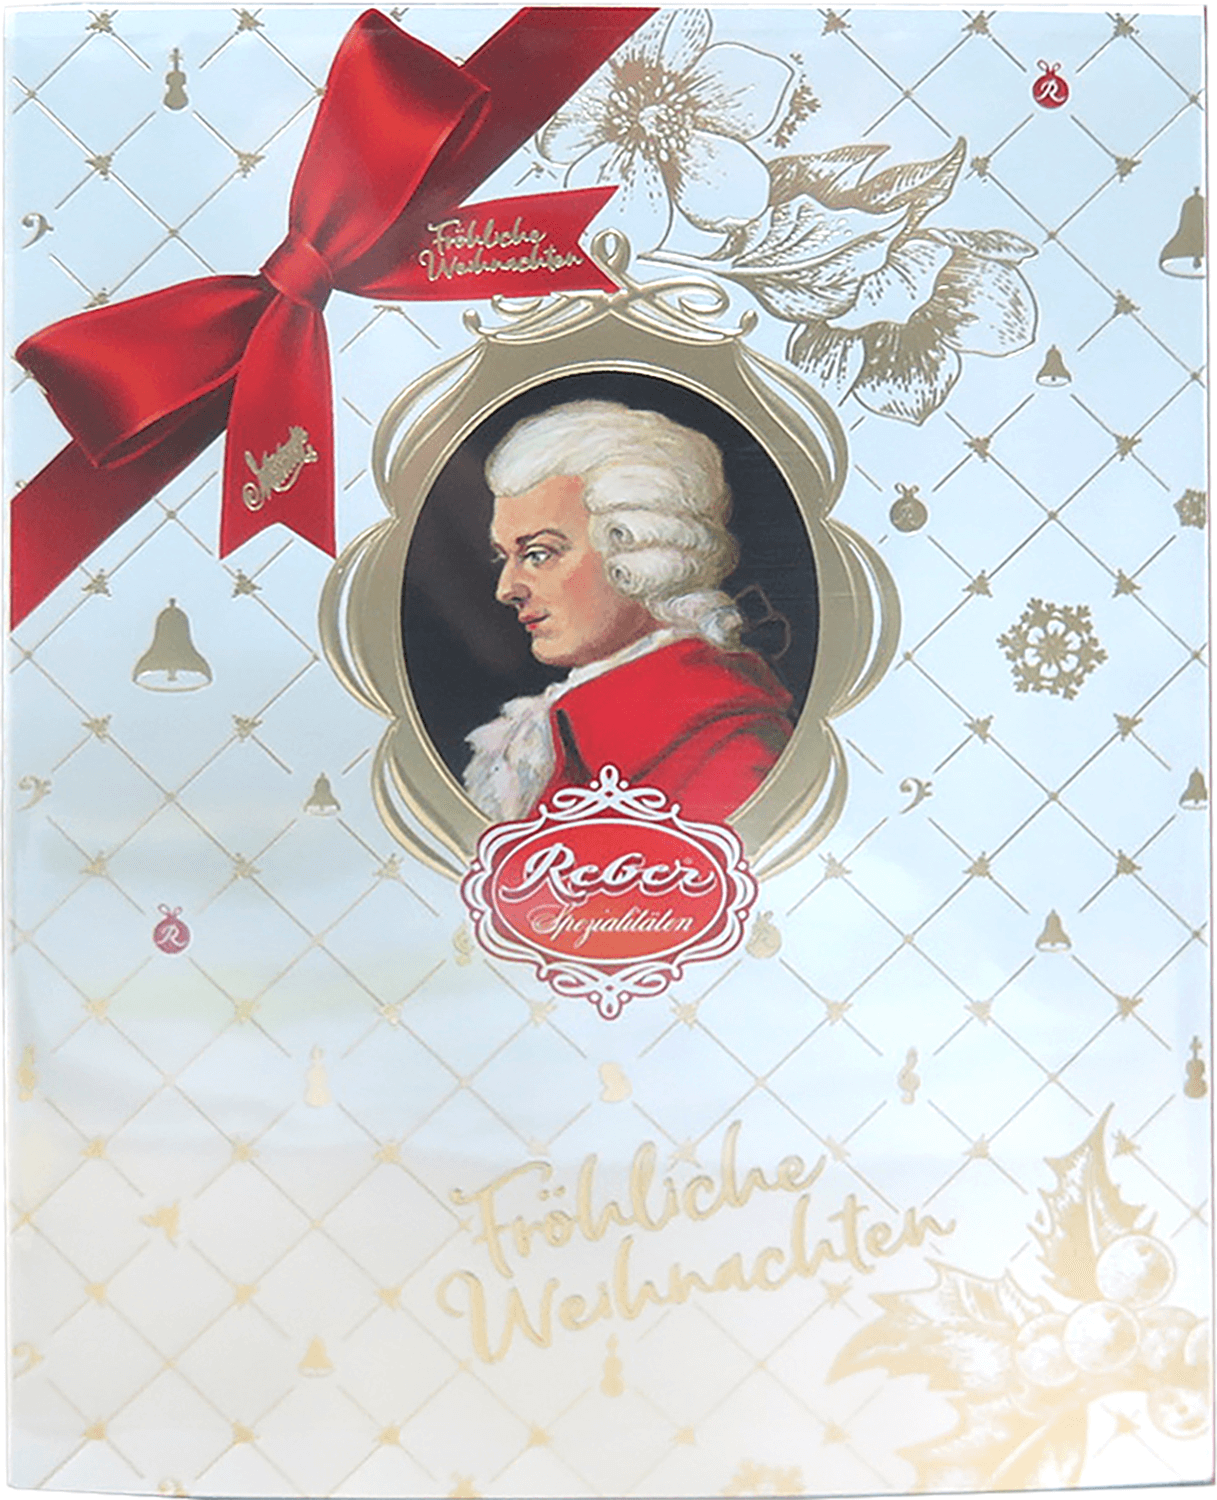 Моцарт конфеты из горького шоколада Ребер 120г